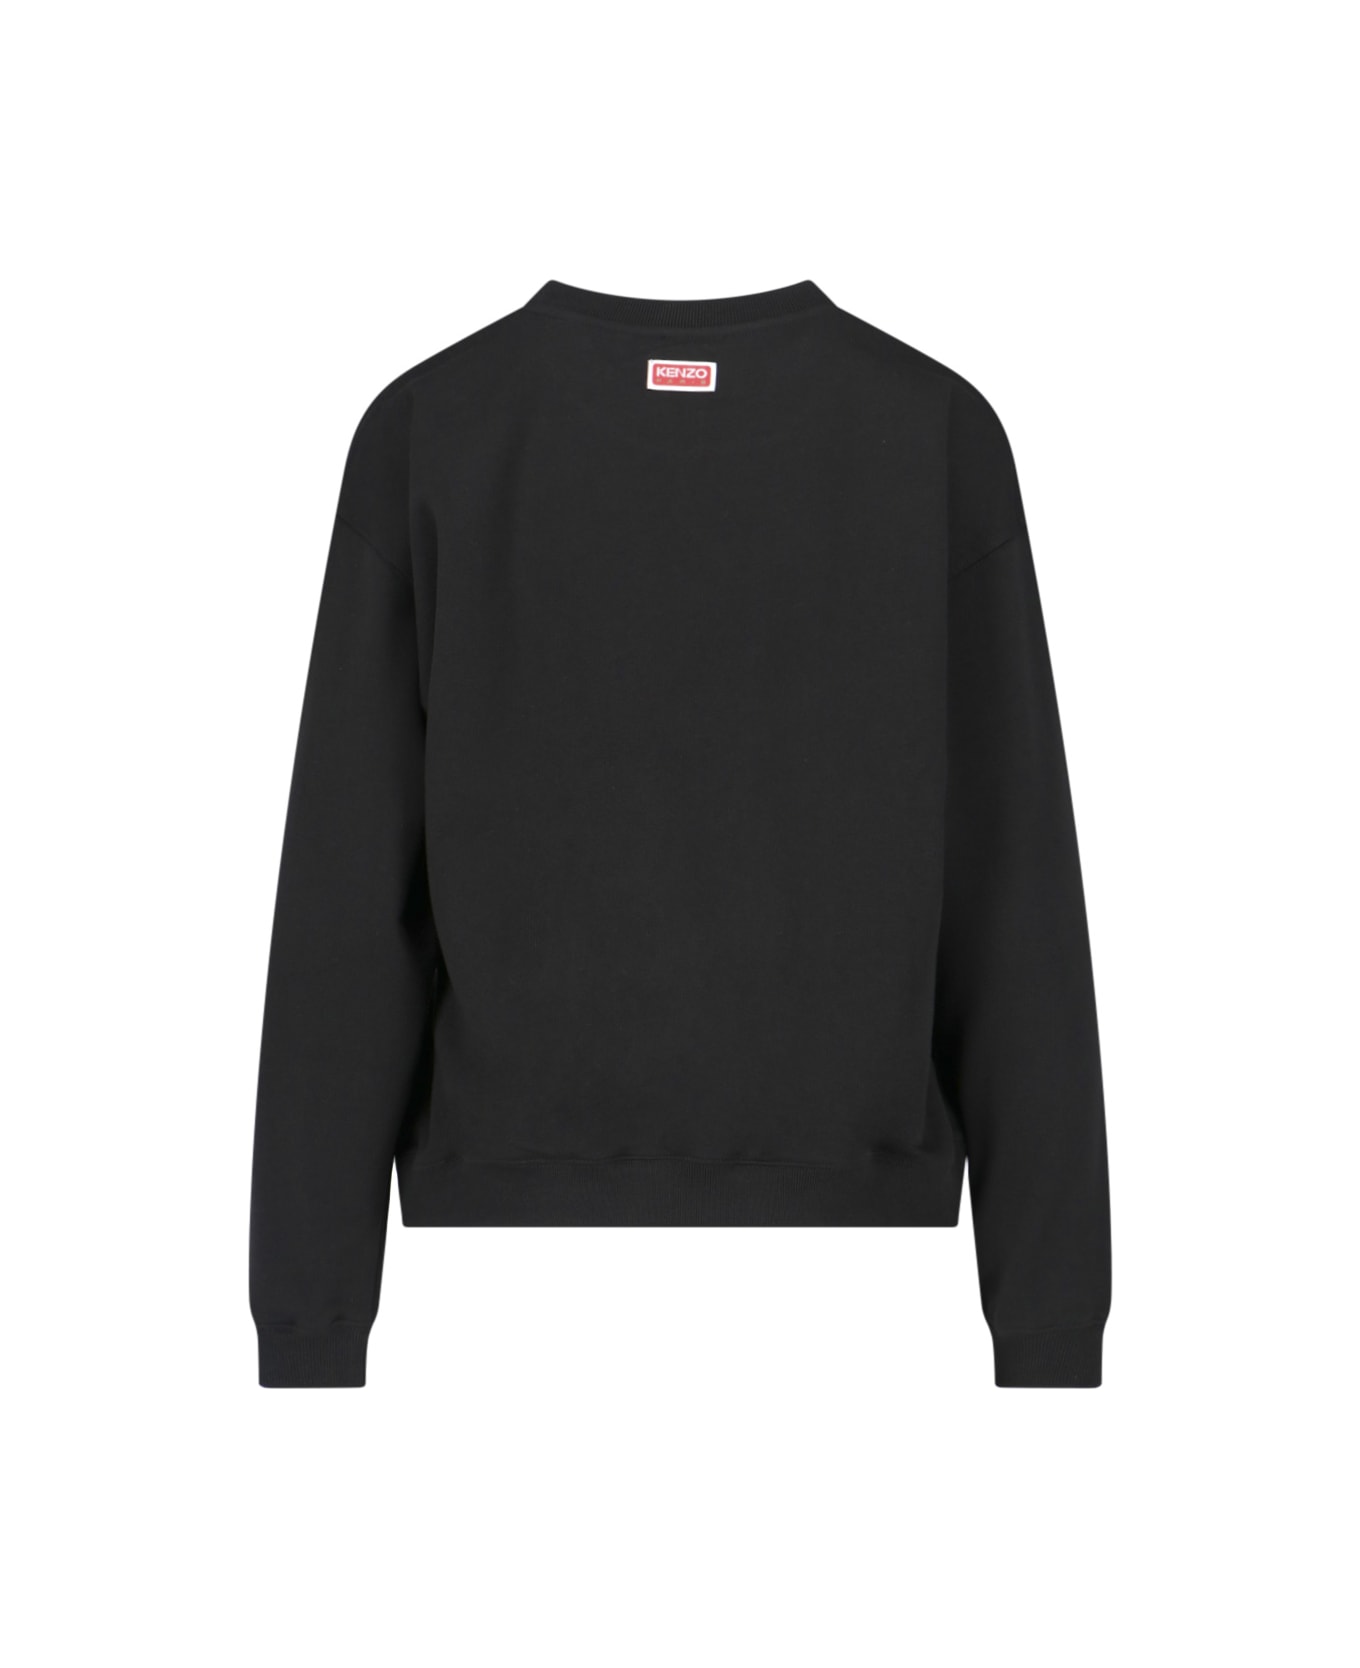 Kenzo Varsity Jungle Sweatshirt - Black